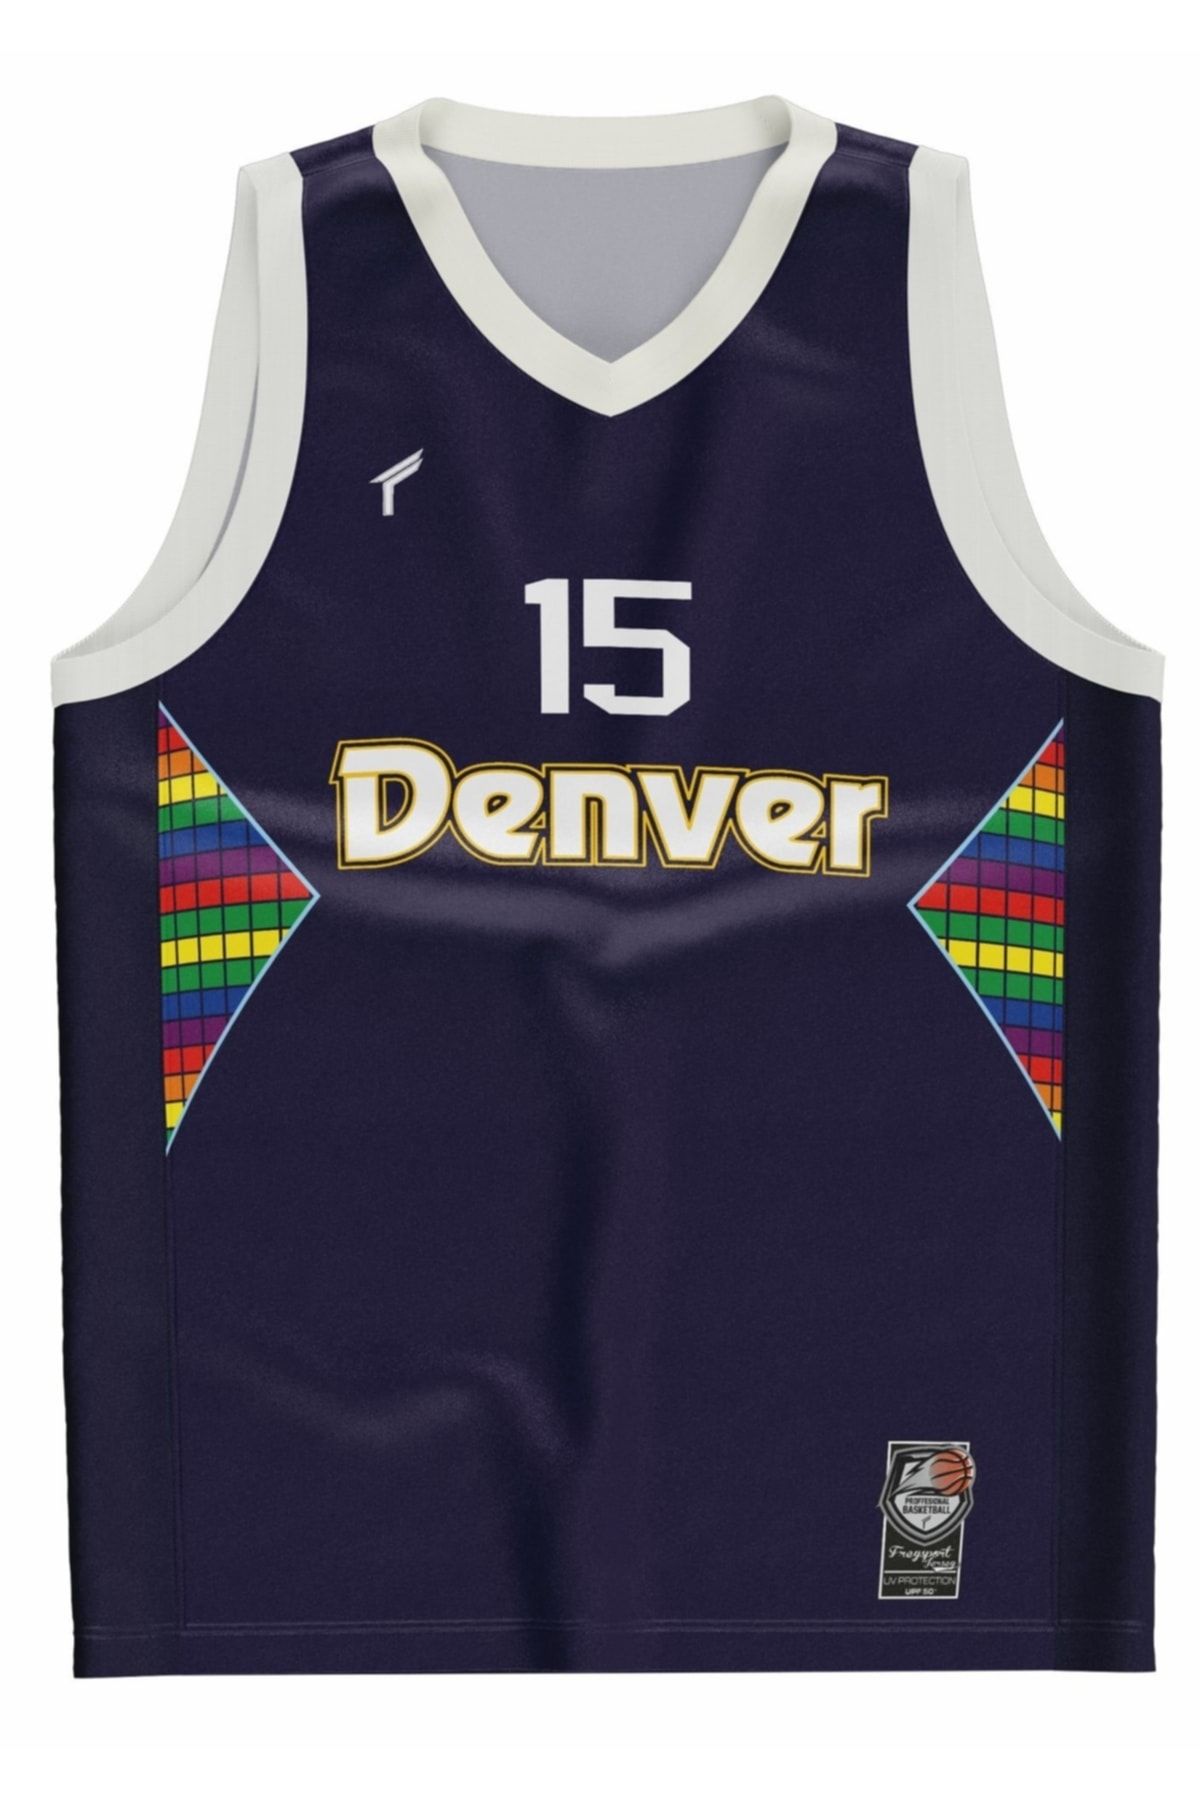 Freysport Denver Basketbol Forması